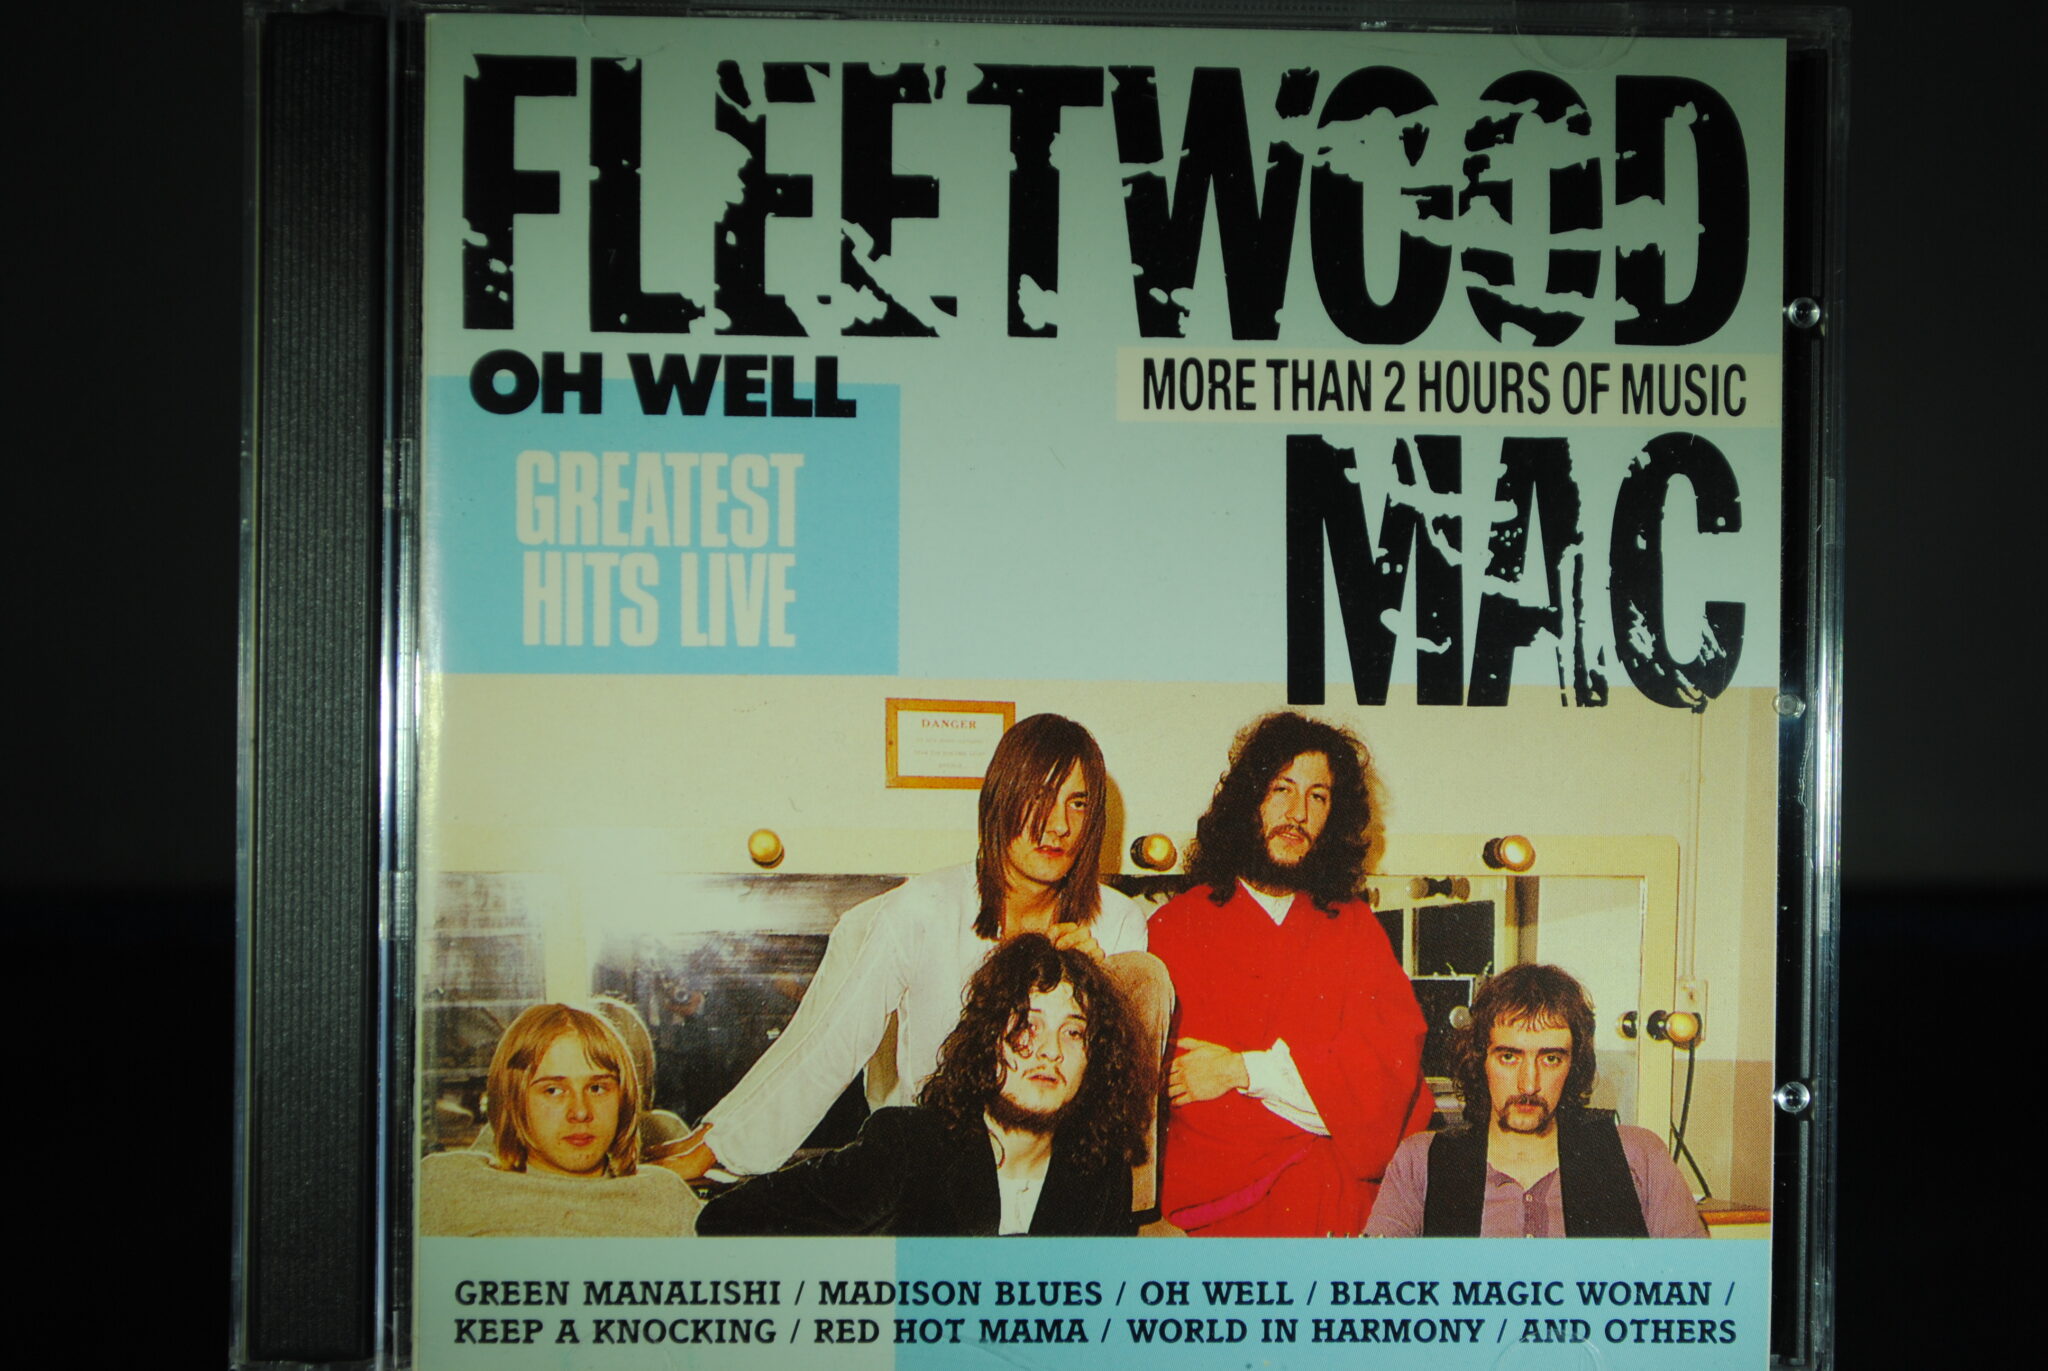 Fleetwood Mac Oh Well Greatest Hits Live 2CD